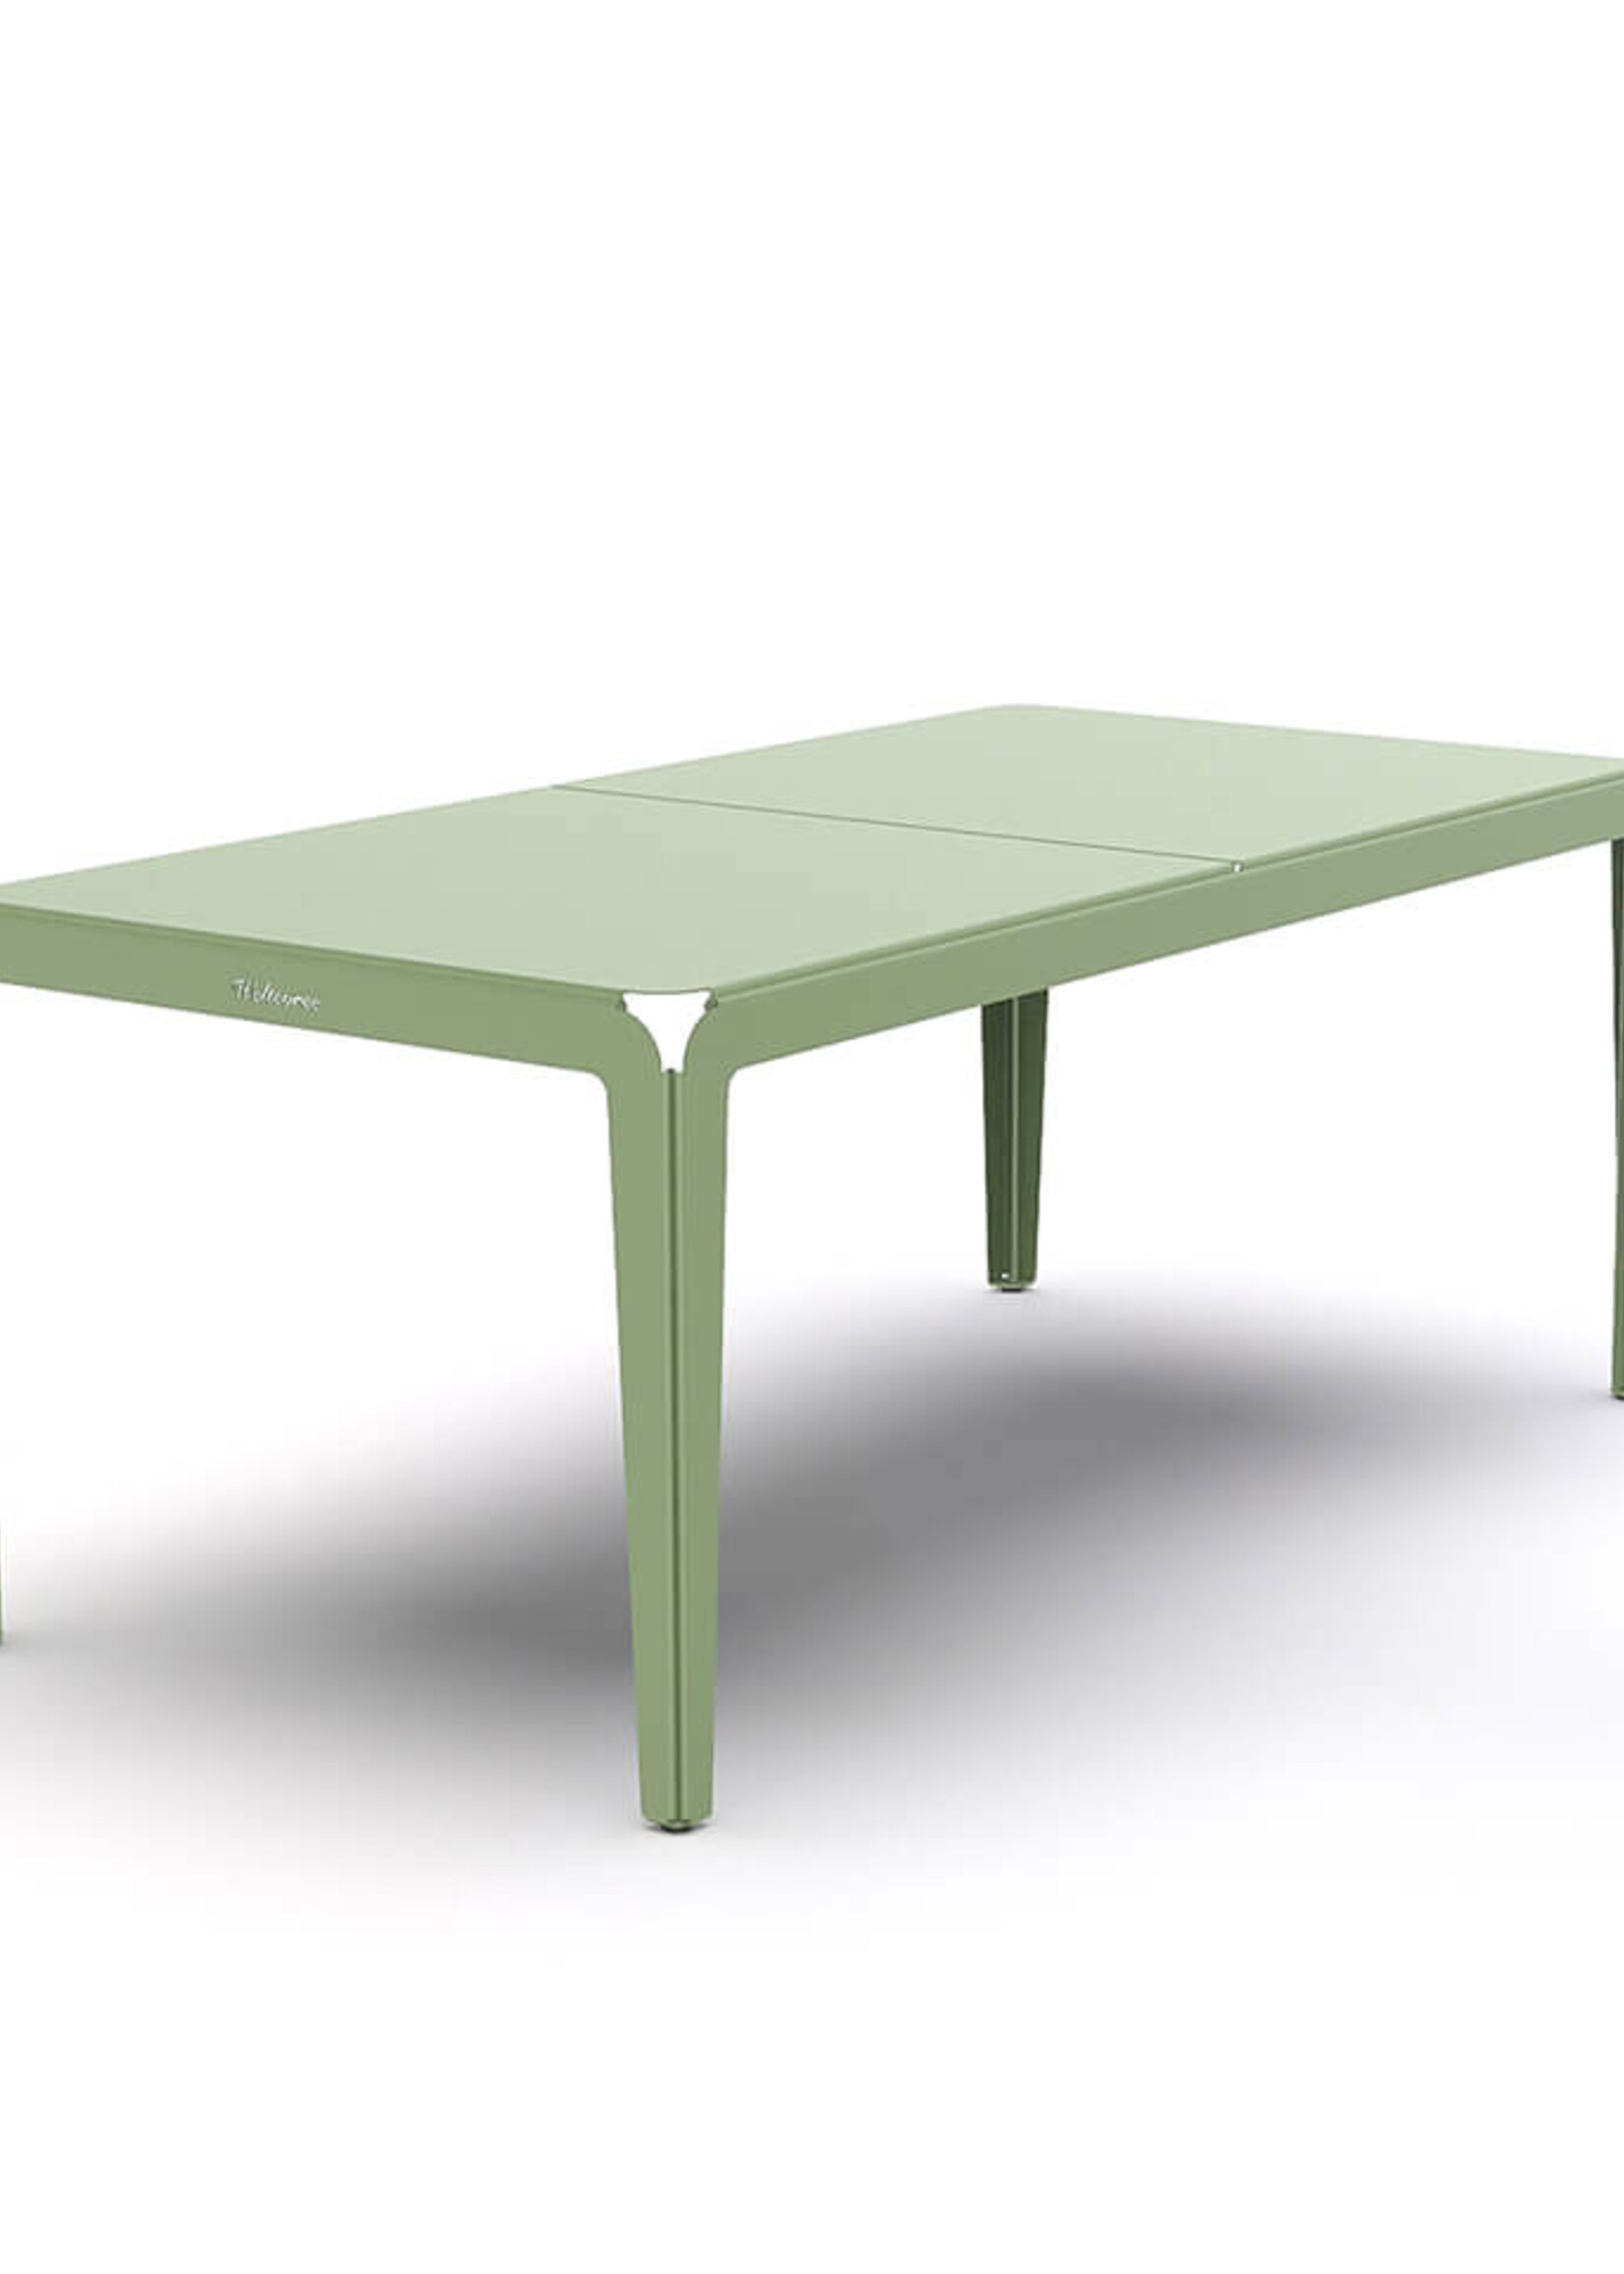 Weltevree Weltevree - Bended Table 180 - Table de jardin légère en aluminium - Vert pâle